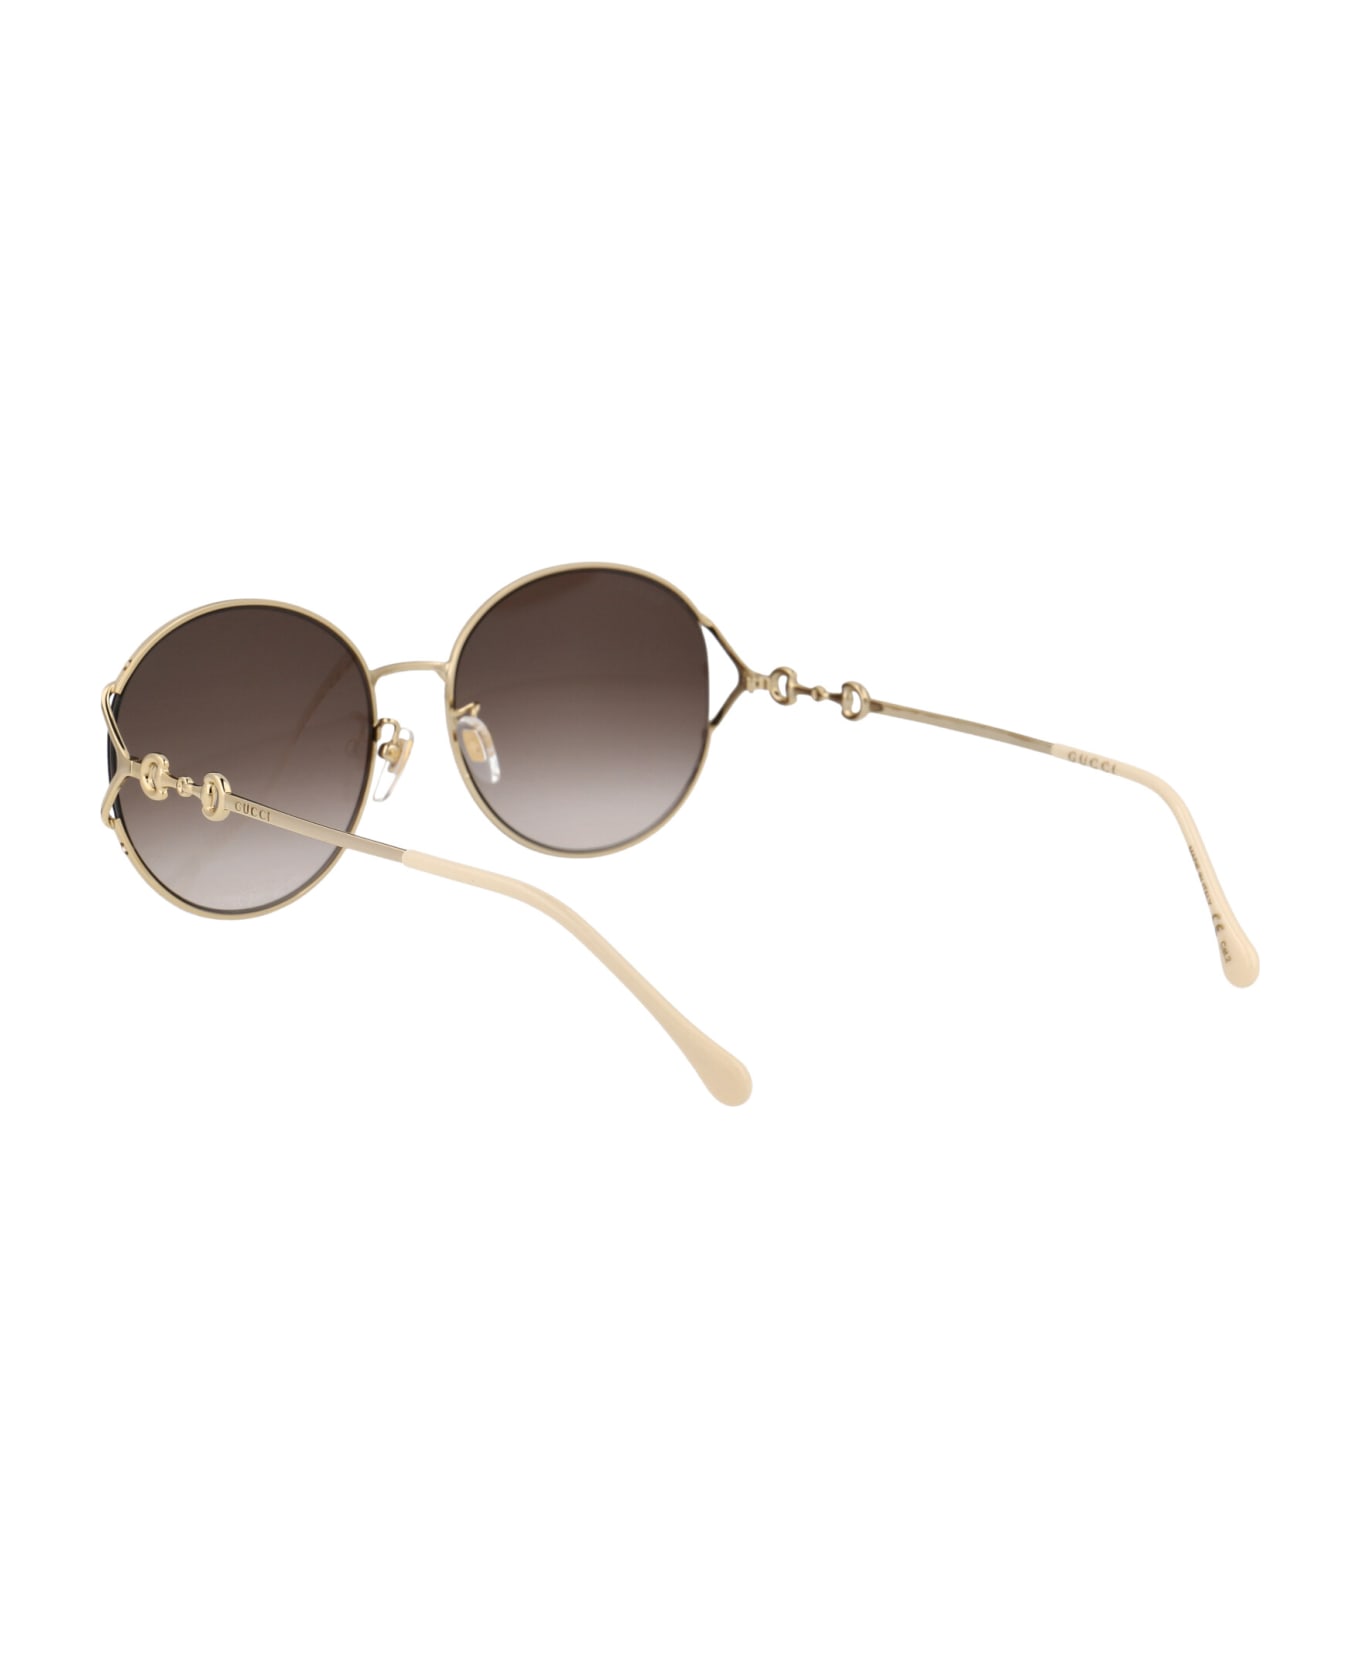 Gucci Eyewear Gg1017sk Sunglasses - 003 GOLD GOLD BROWN